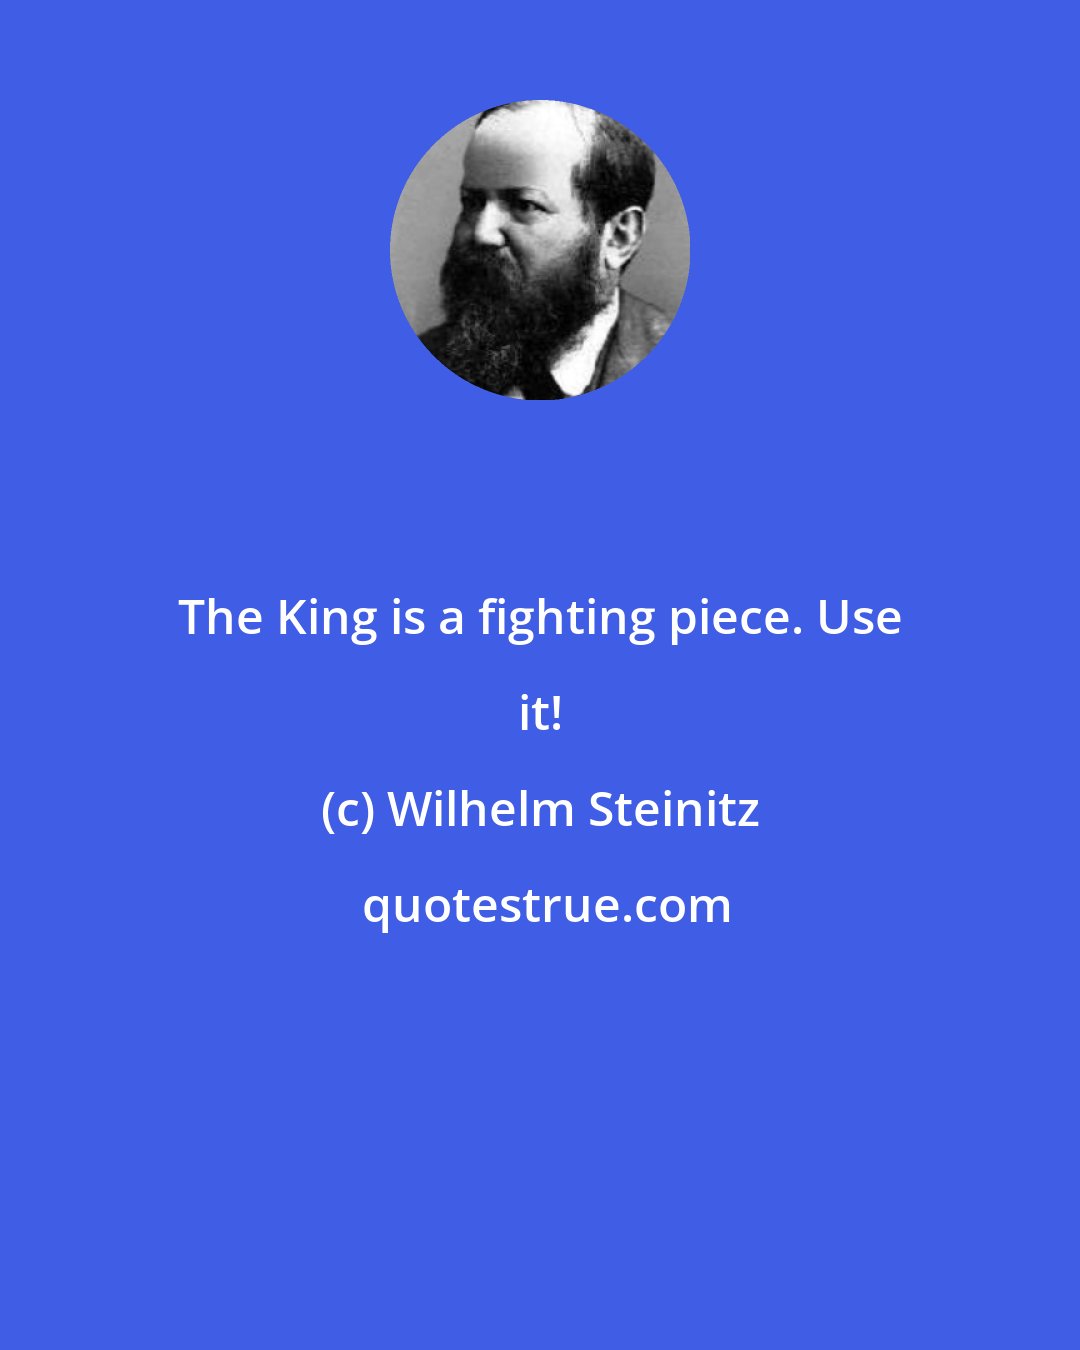 Wilhelm Steinitz: The King is a fighting piece. Use it!